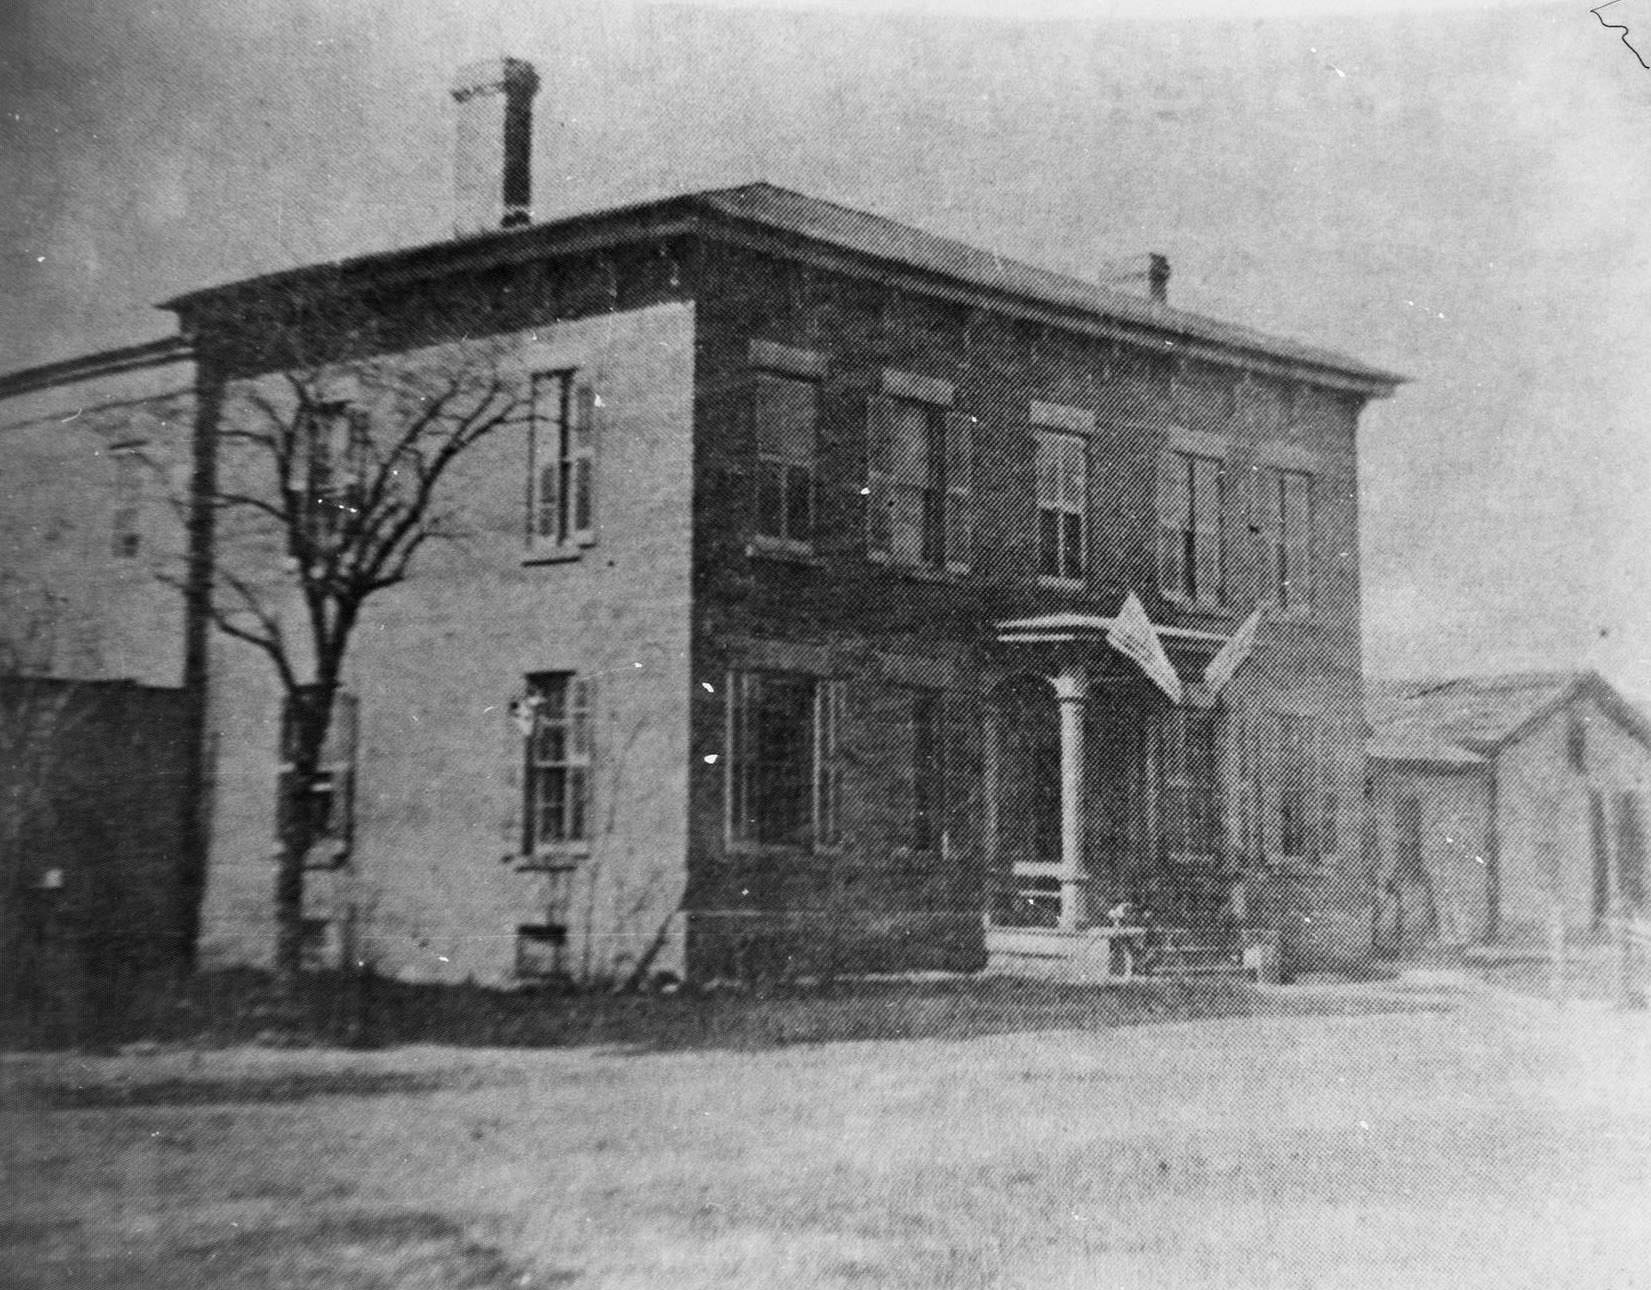 Rock County Jail, 1871